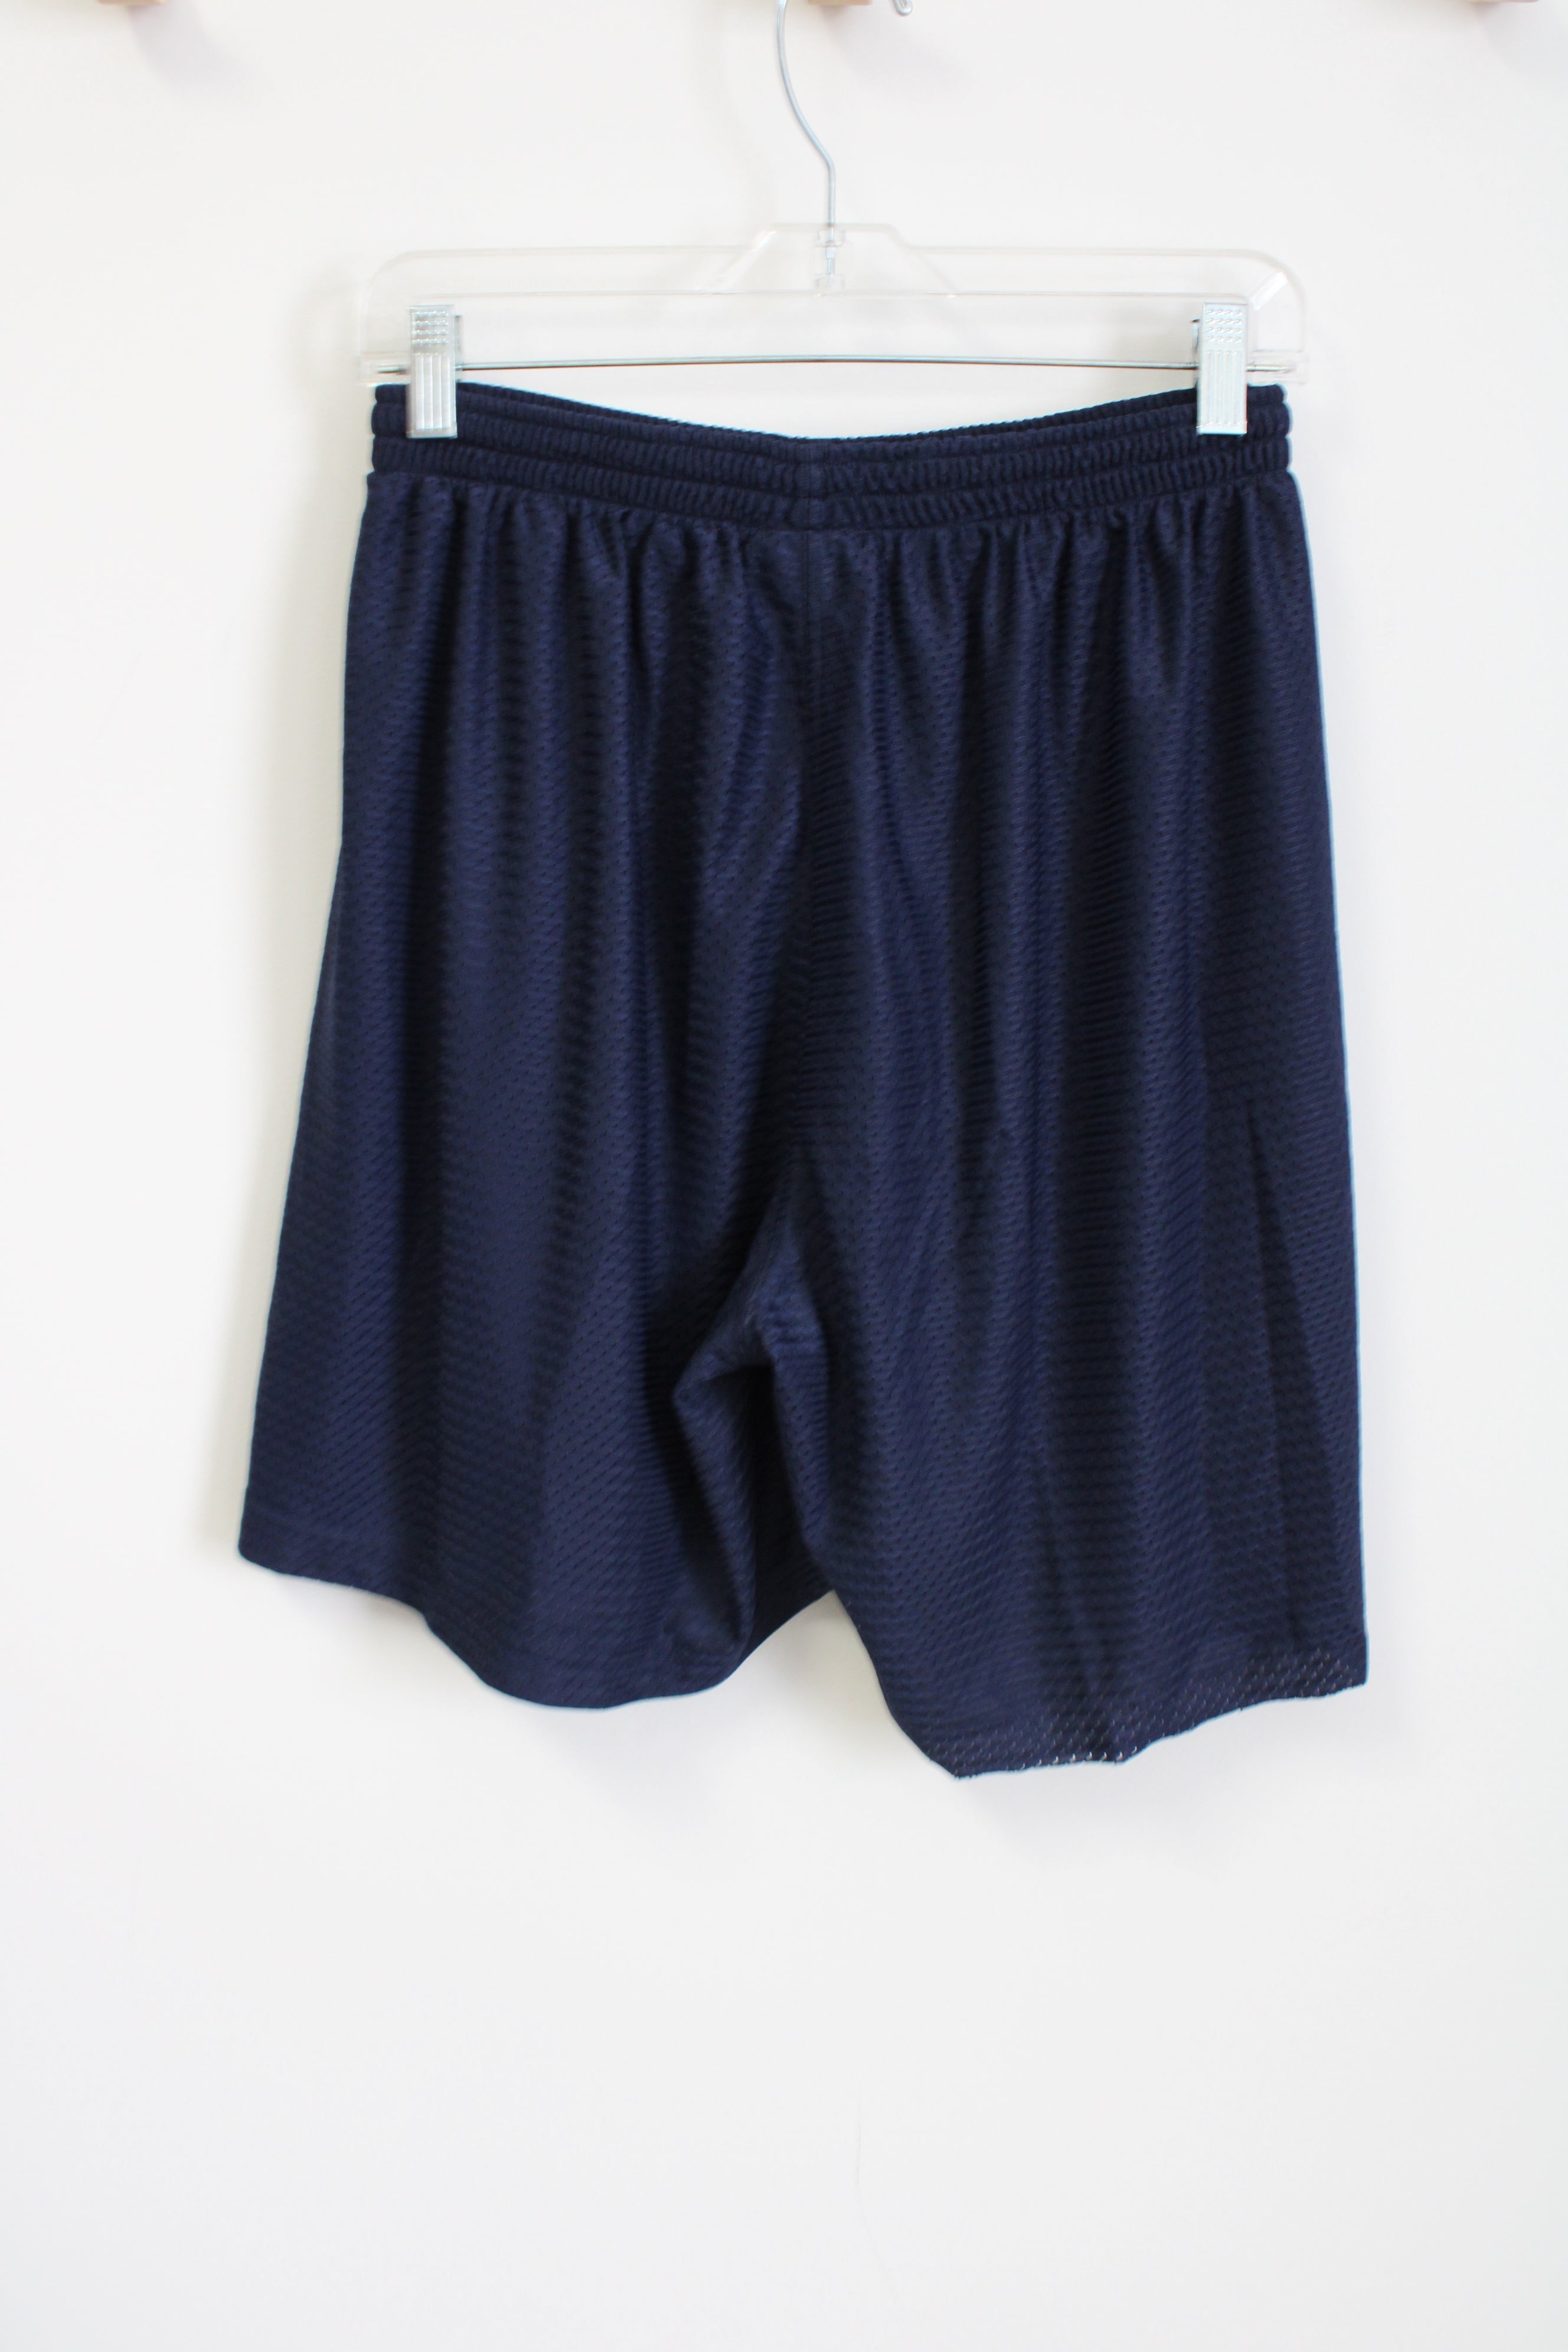 Reebok Dark Navy Blue Shorts | L